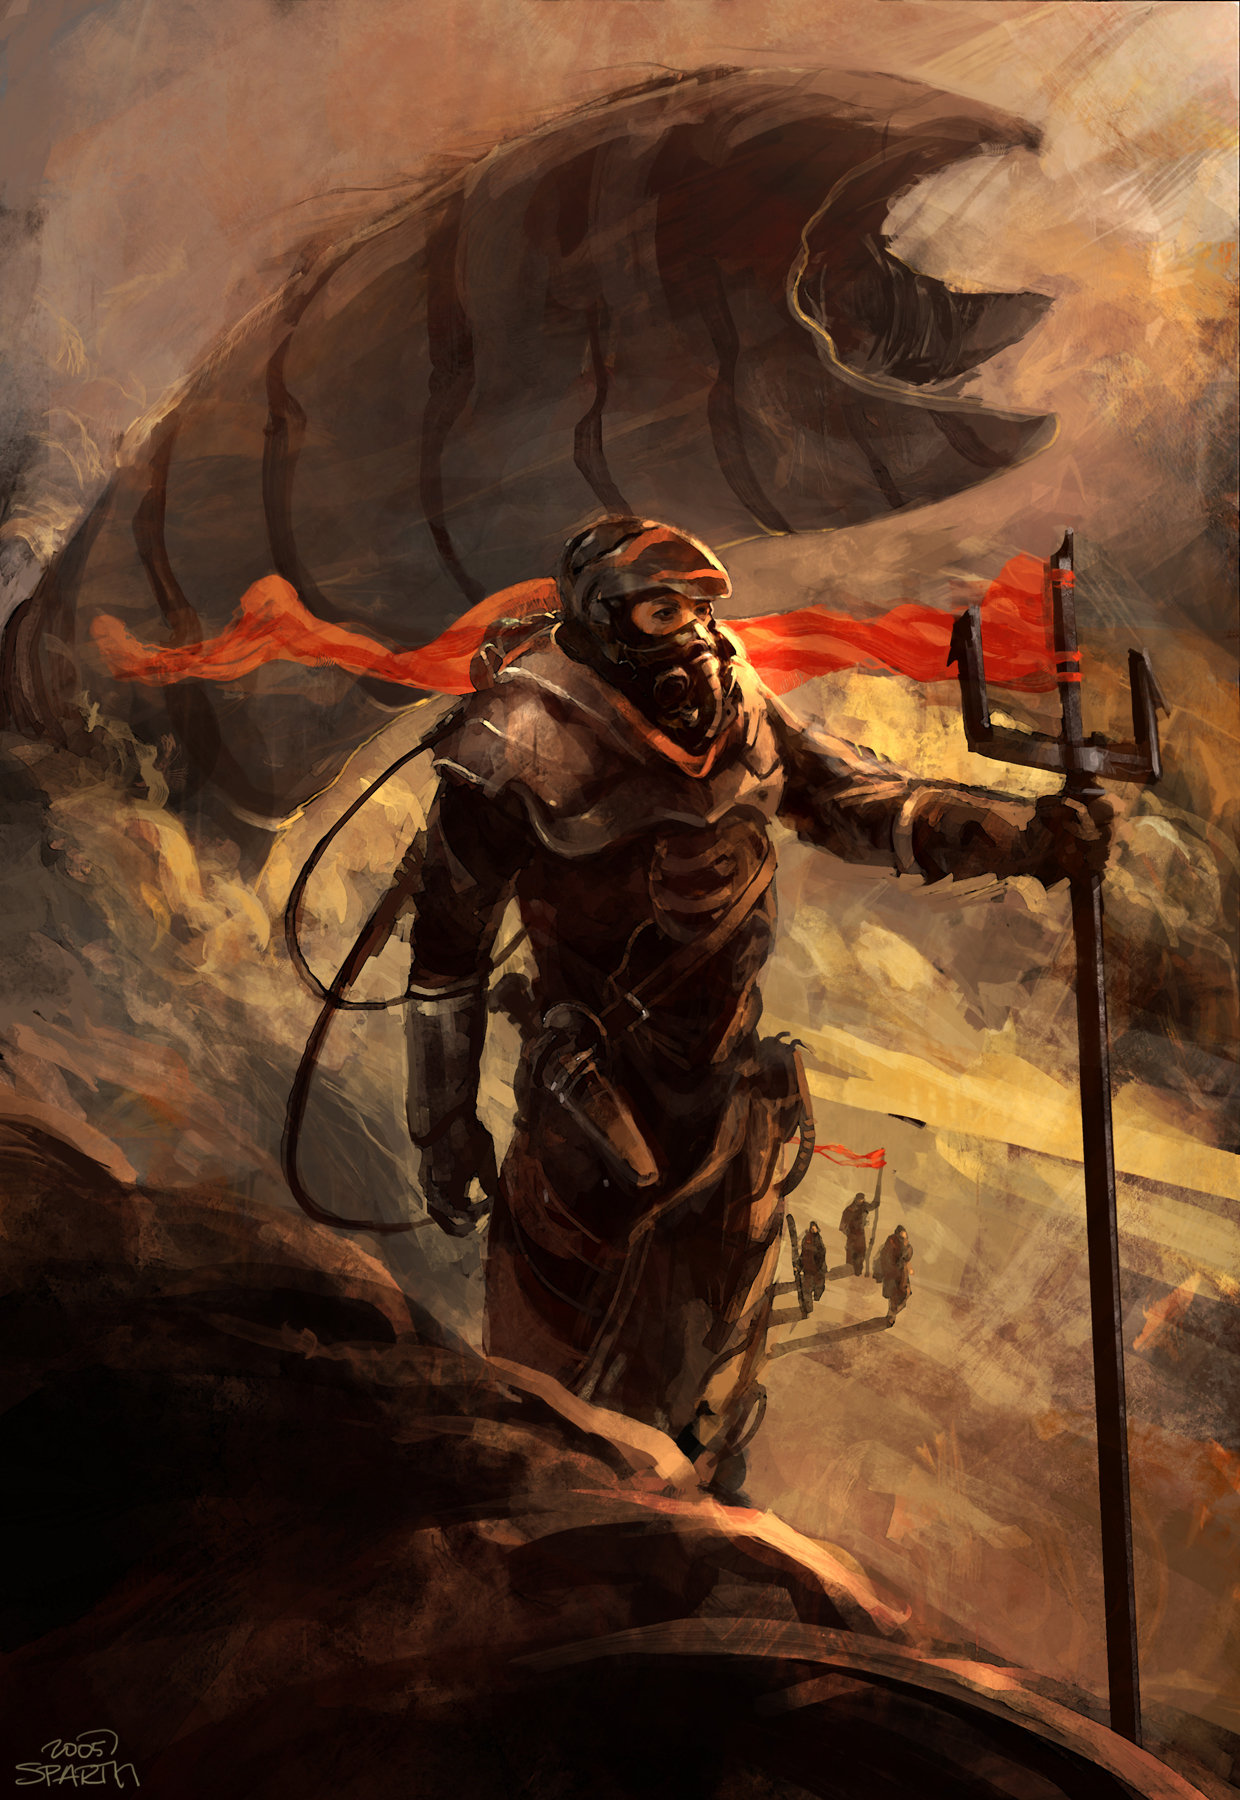 General 1240x1800 Sparth. Nicolas Bouvier Sandworm Arrakis science fiction Paul Atreides Dune (series) artwork